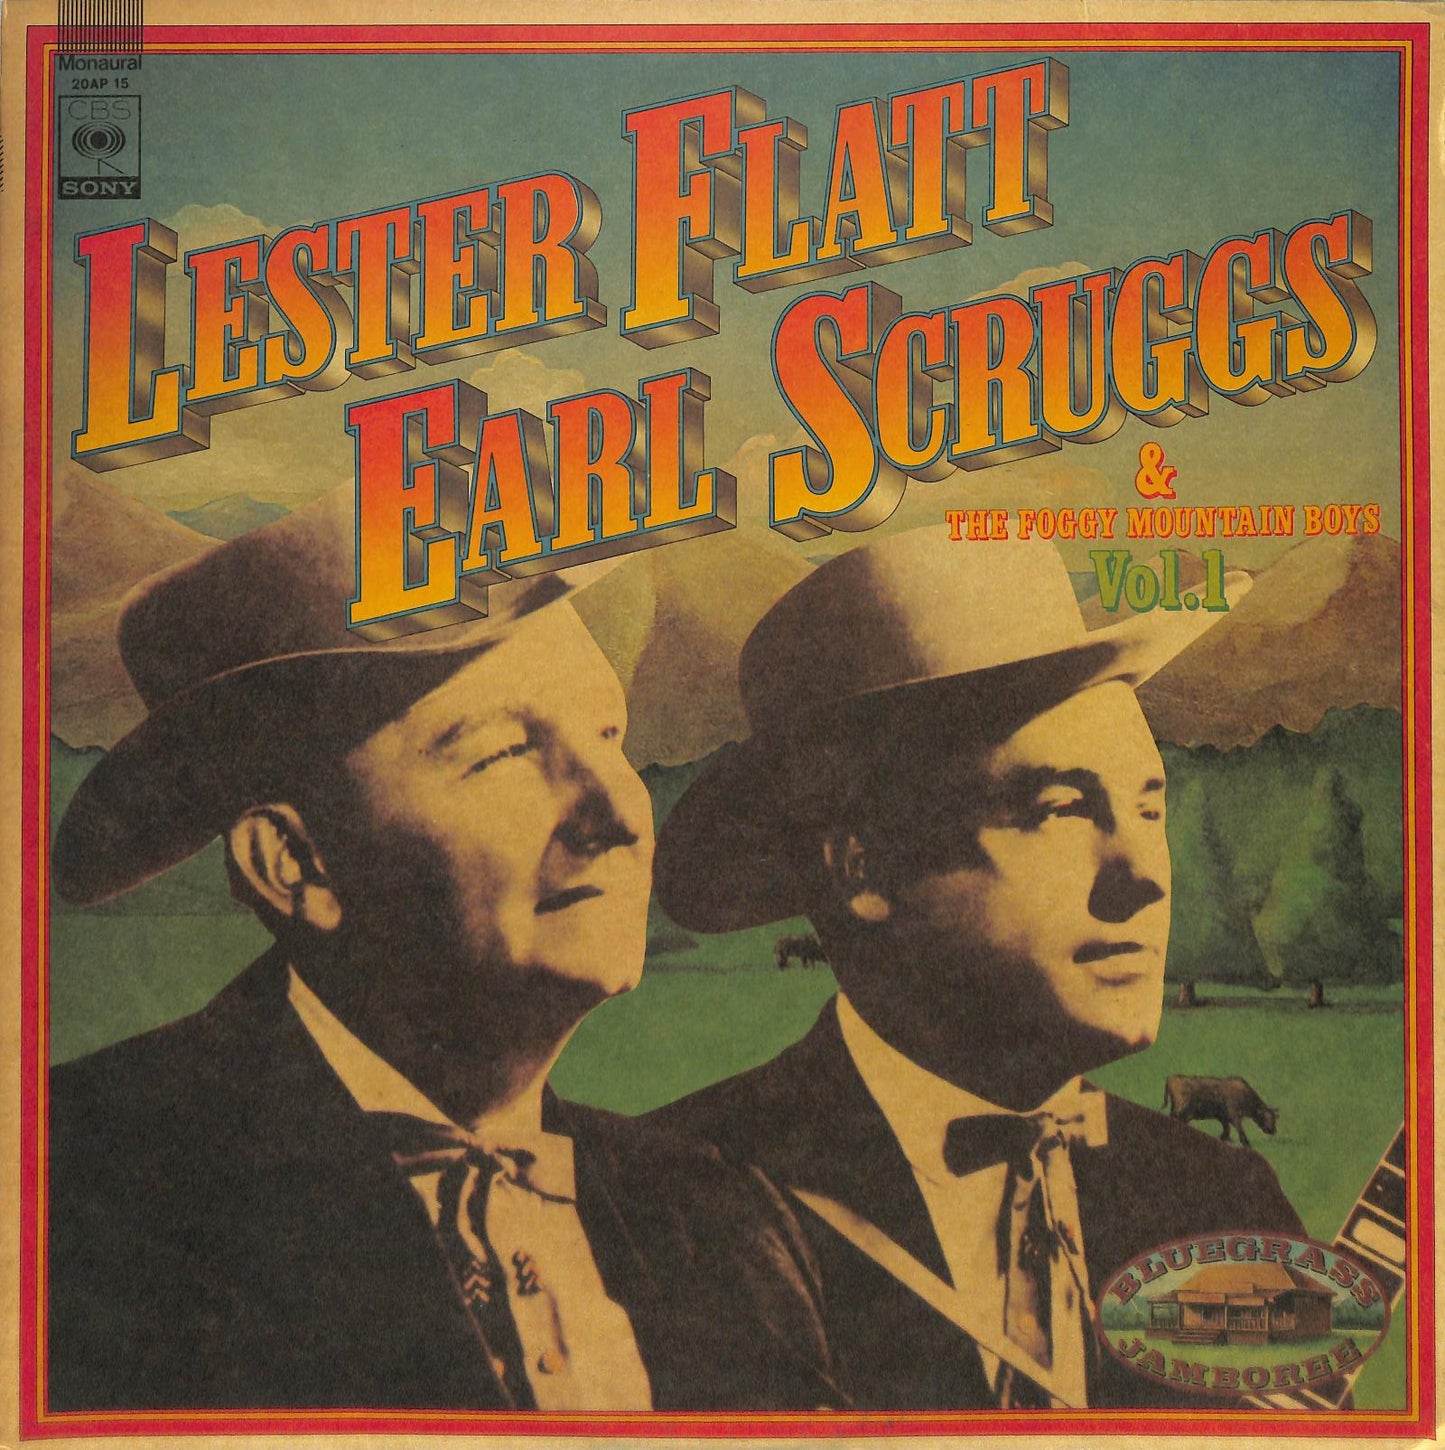 LESTER FLATT, EARL SCRUGGS & THE FOGGY MOUNTAIN BOYS - Vol. 1